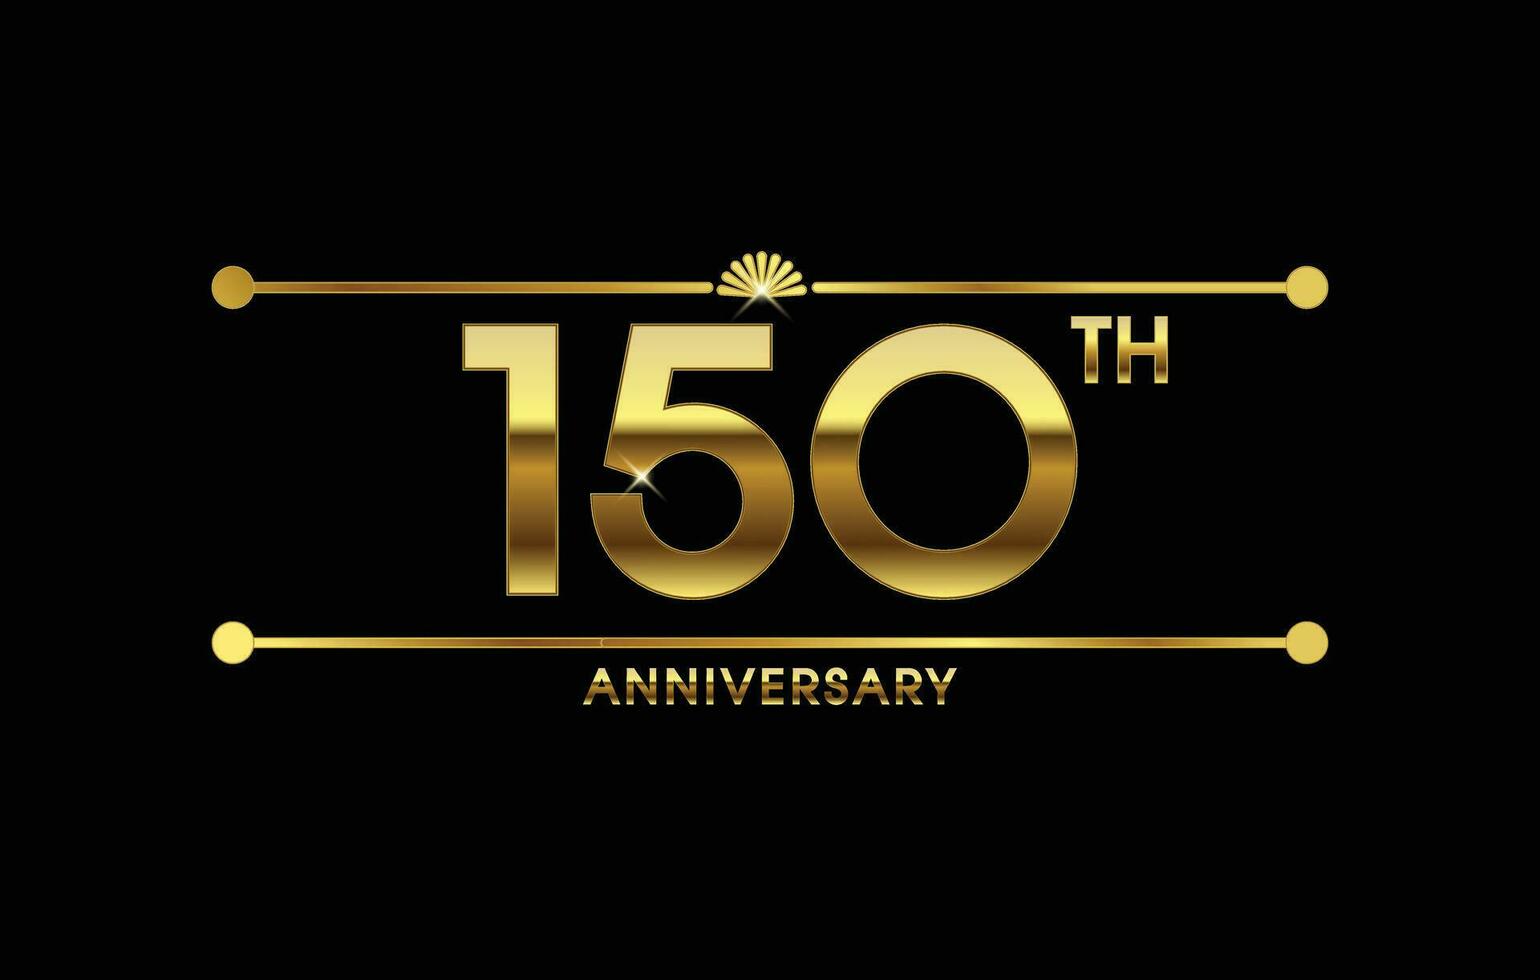 150 years anniversary  celebration vector